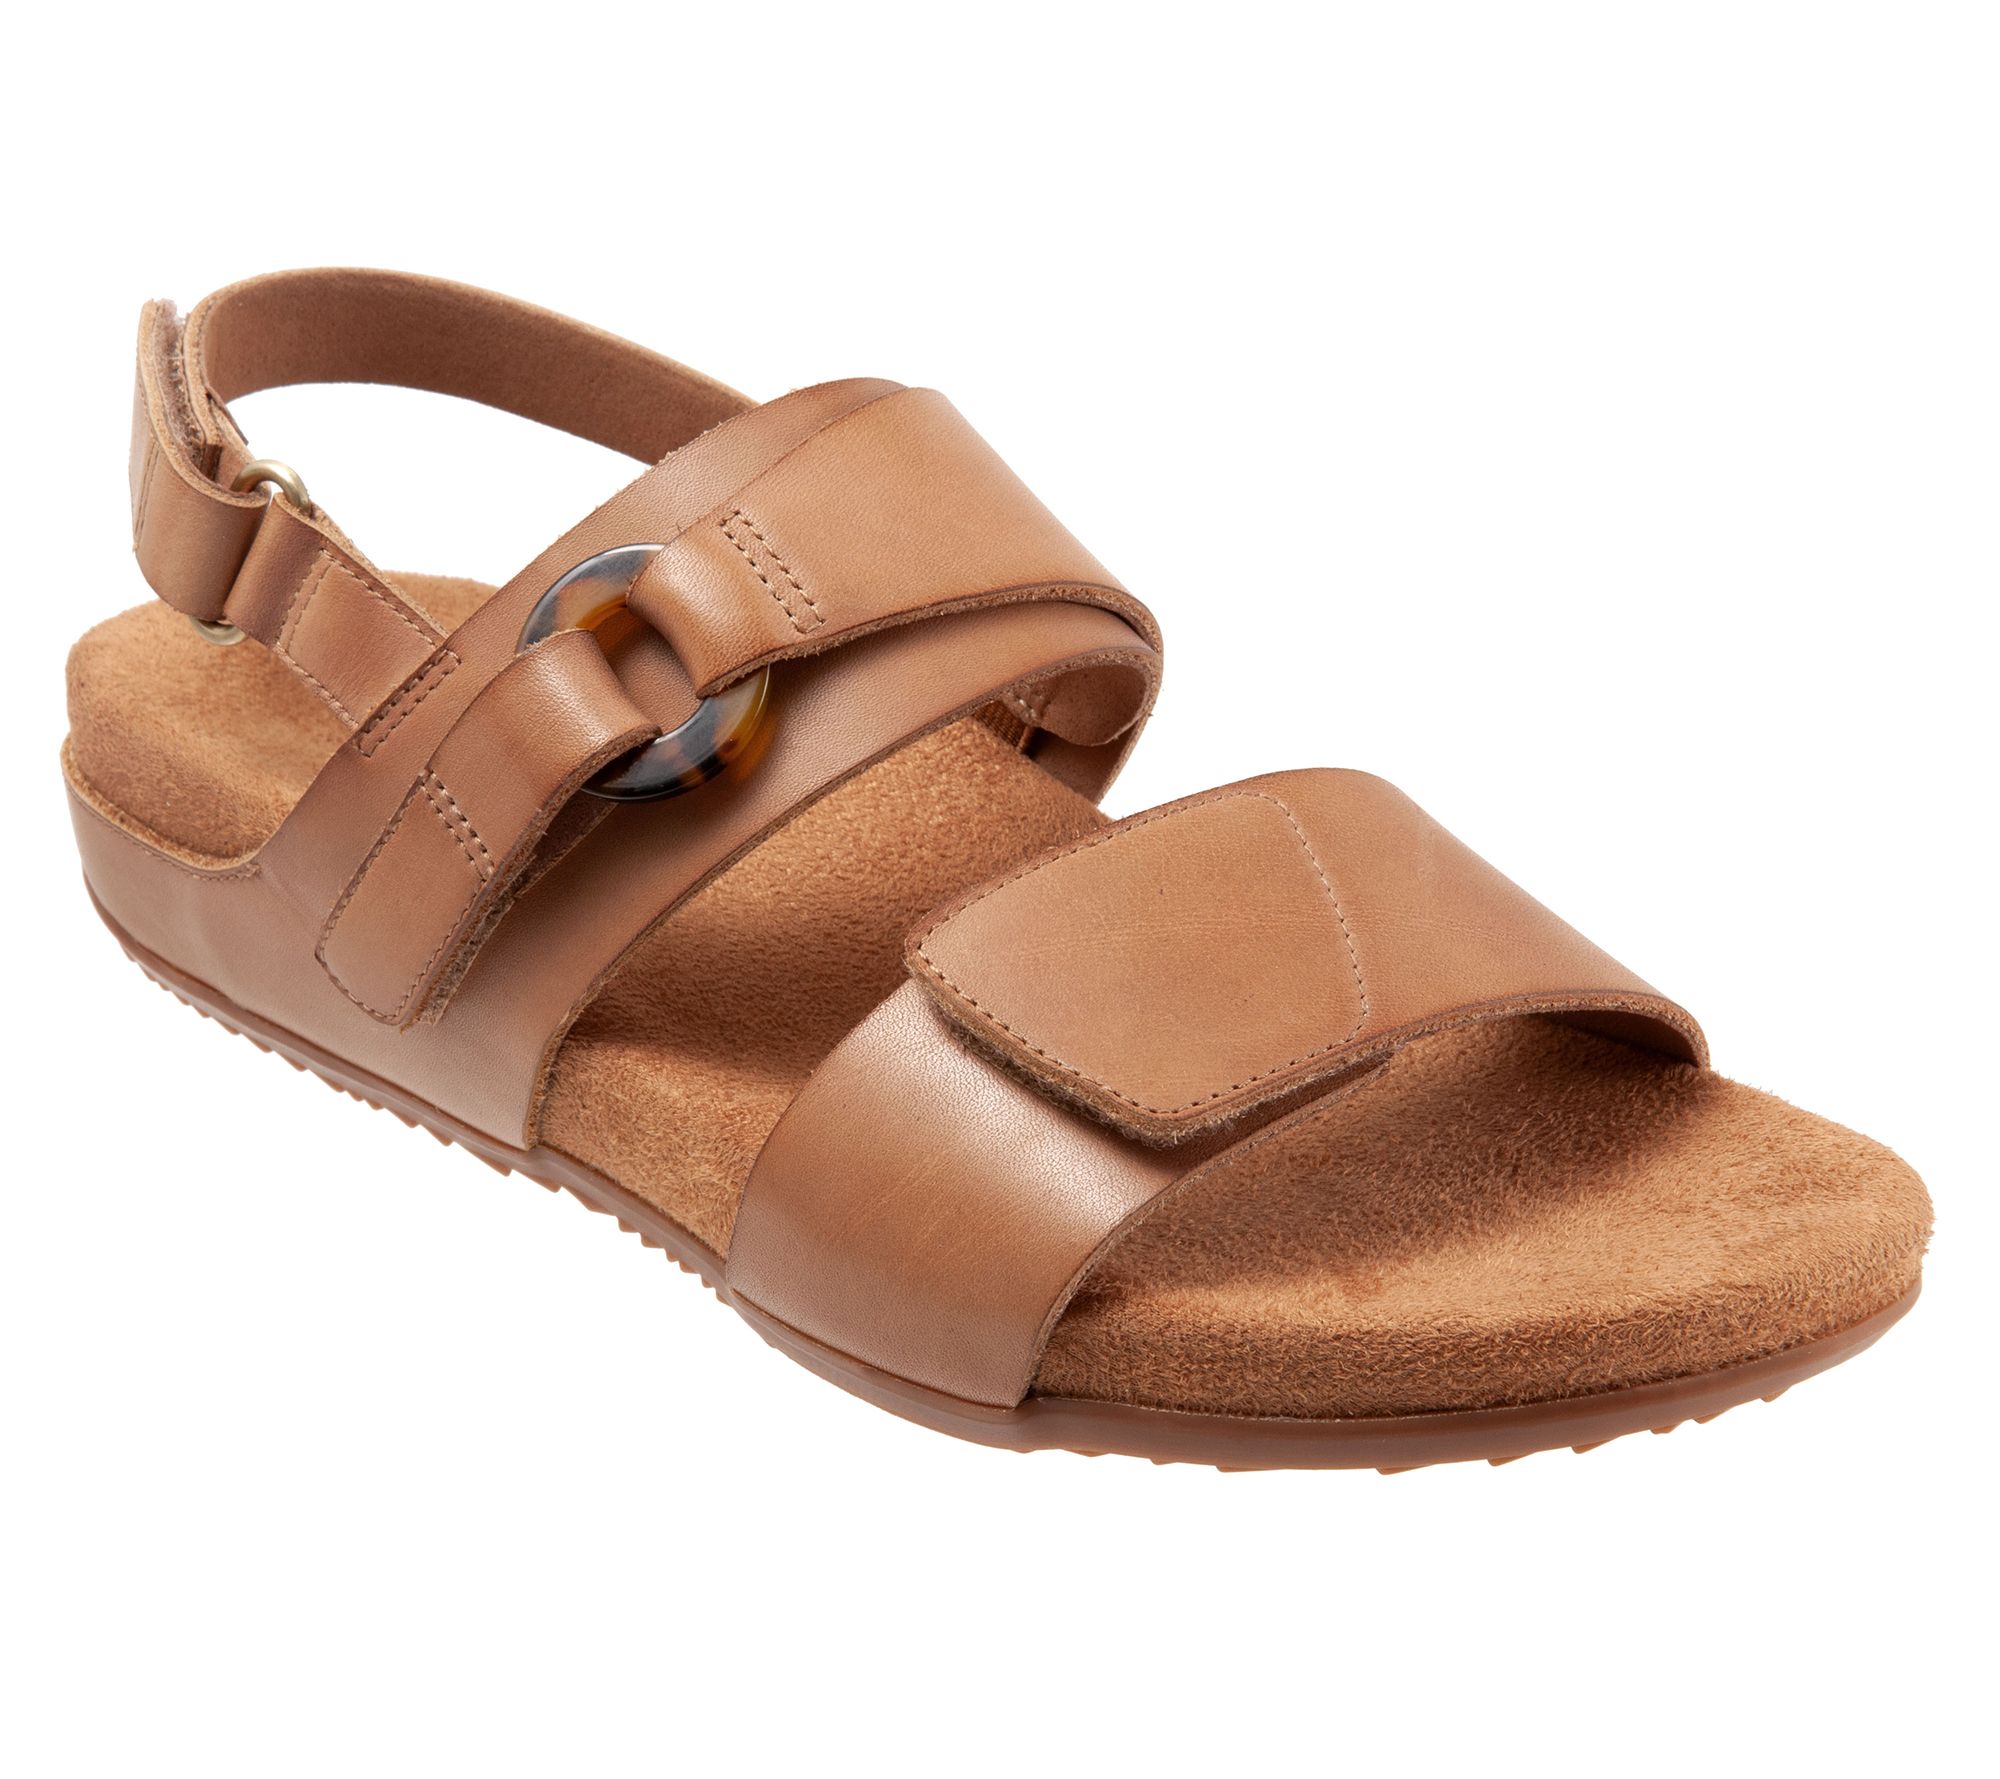 SoftWalk Adjustable Leather Sandals - Benissa - QVC.com